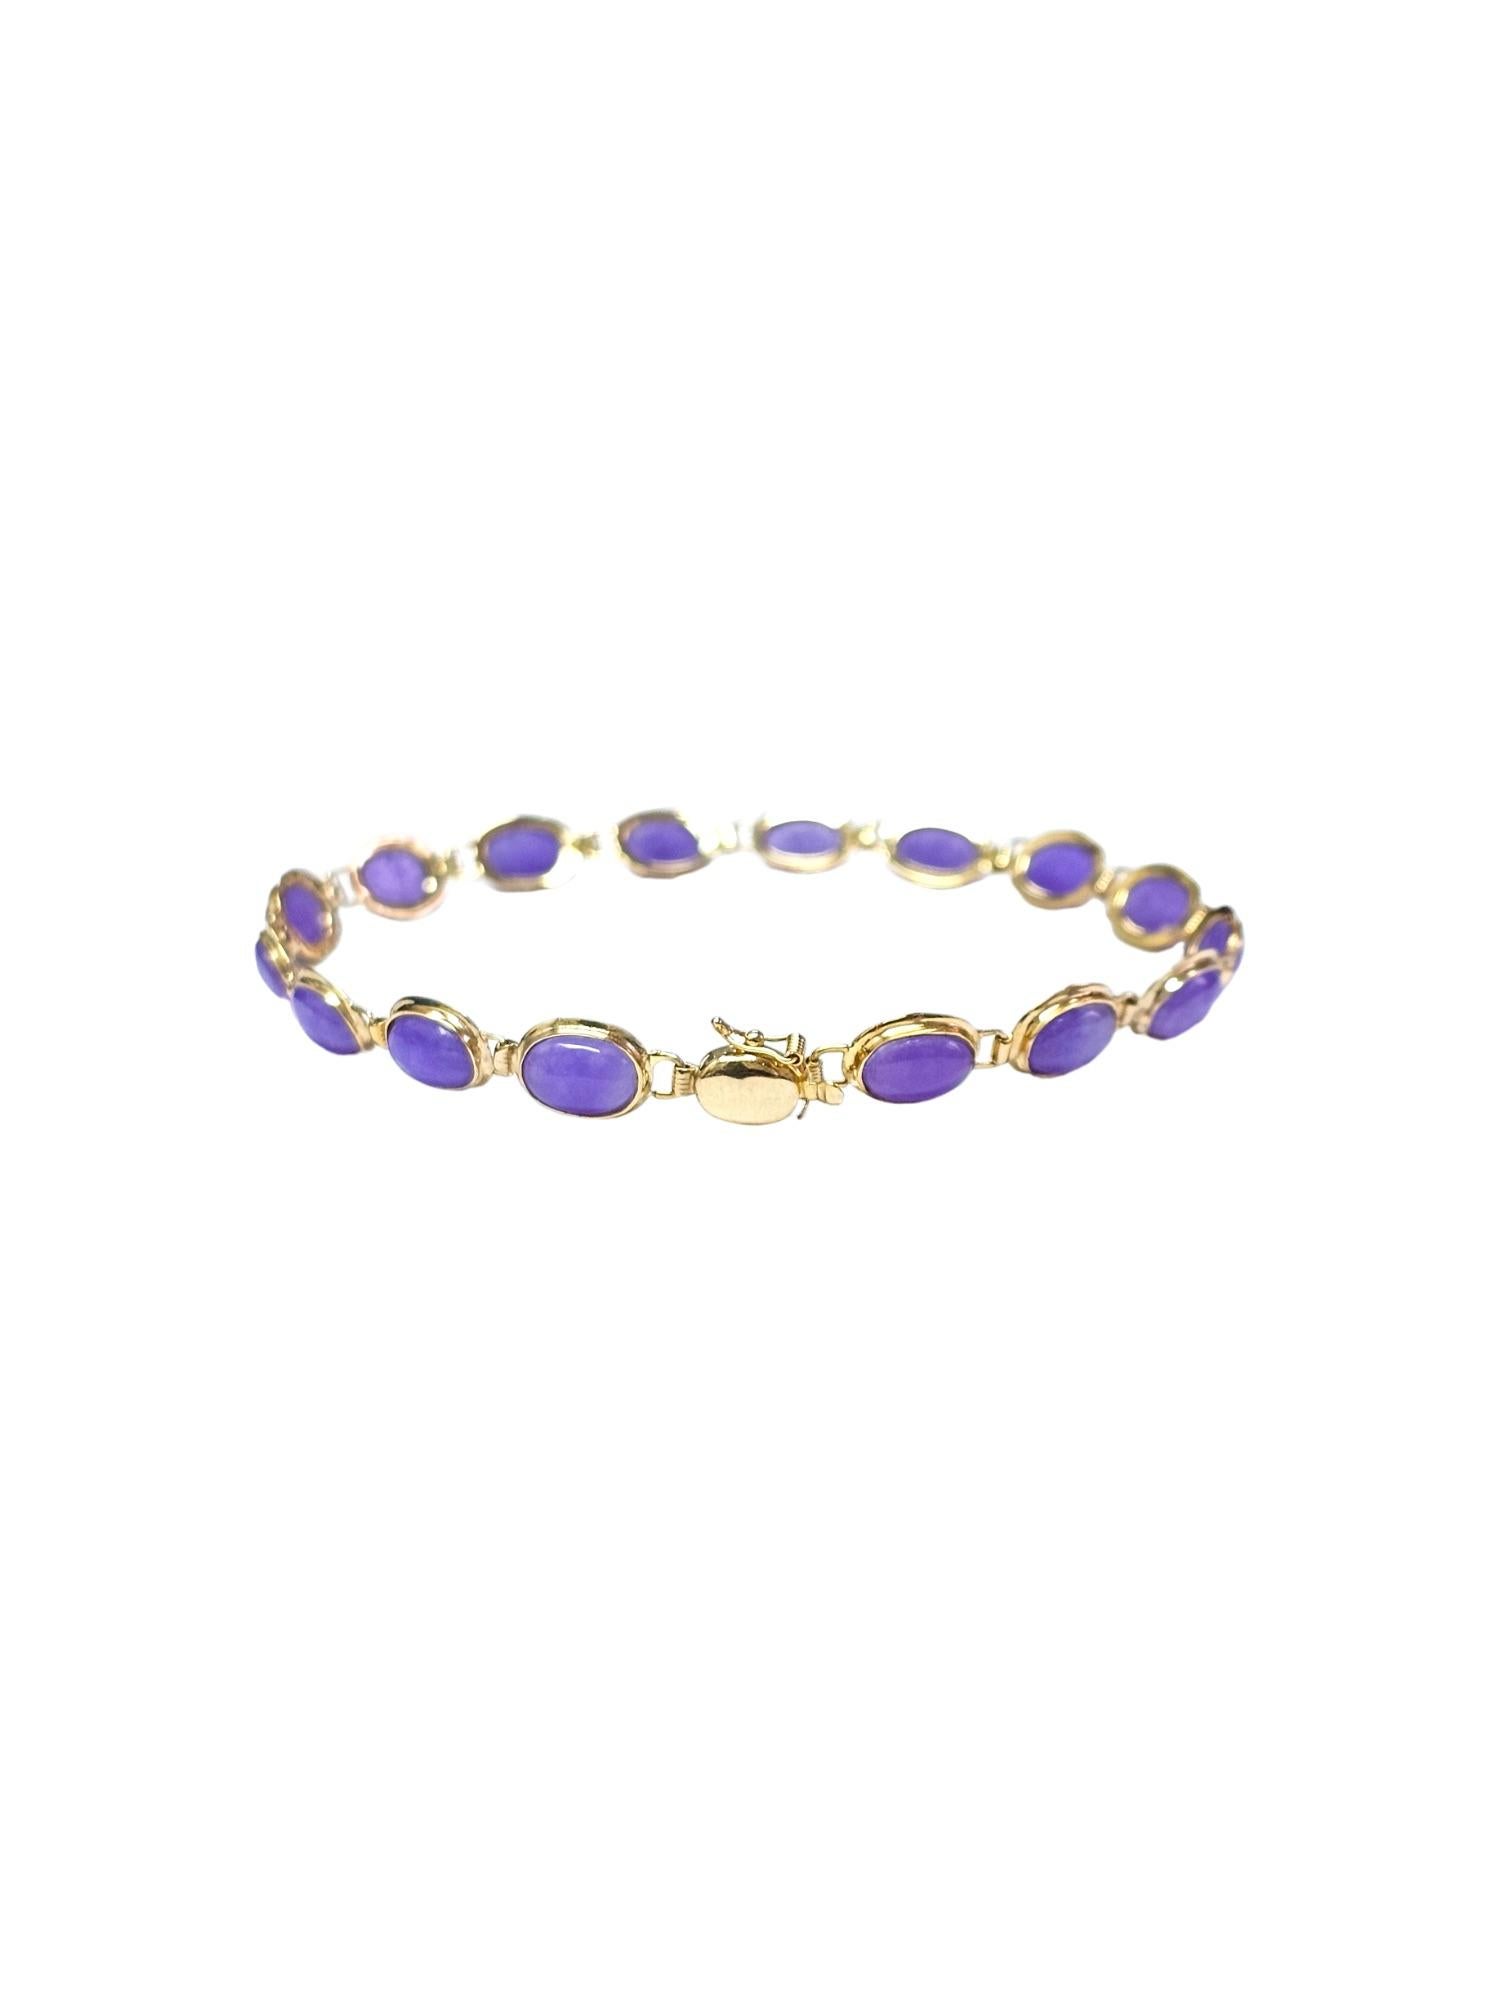 Tibetan Purple Lavender Jadeite Beaded Bracelet (with 14K Solid Yellow Gold) For Sale 1